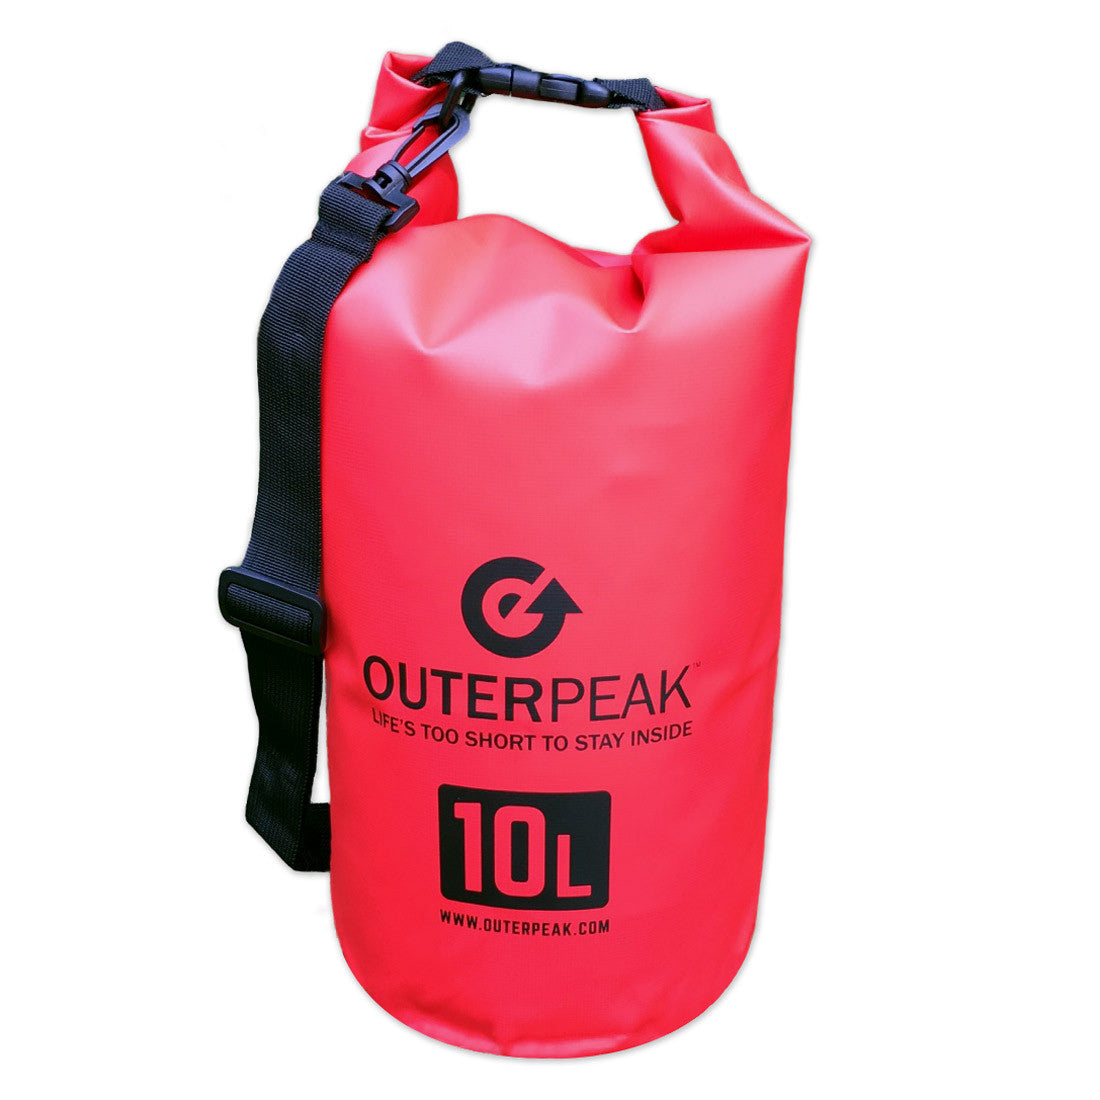 Troika Waterproof 10 Liter Bag for Outdoor Adventures | Troikaus.com